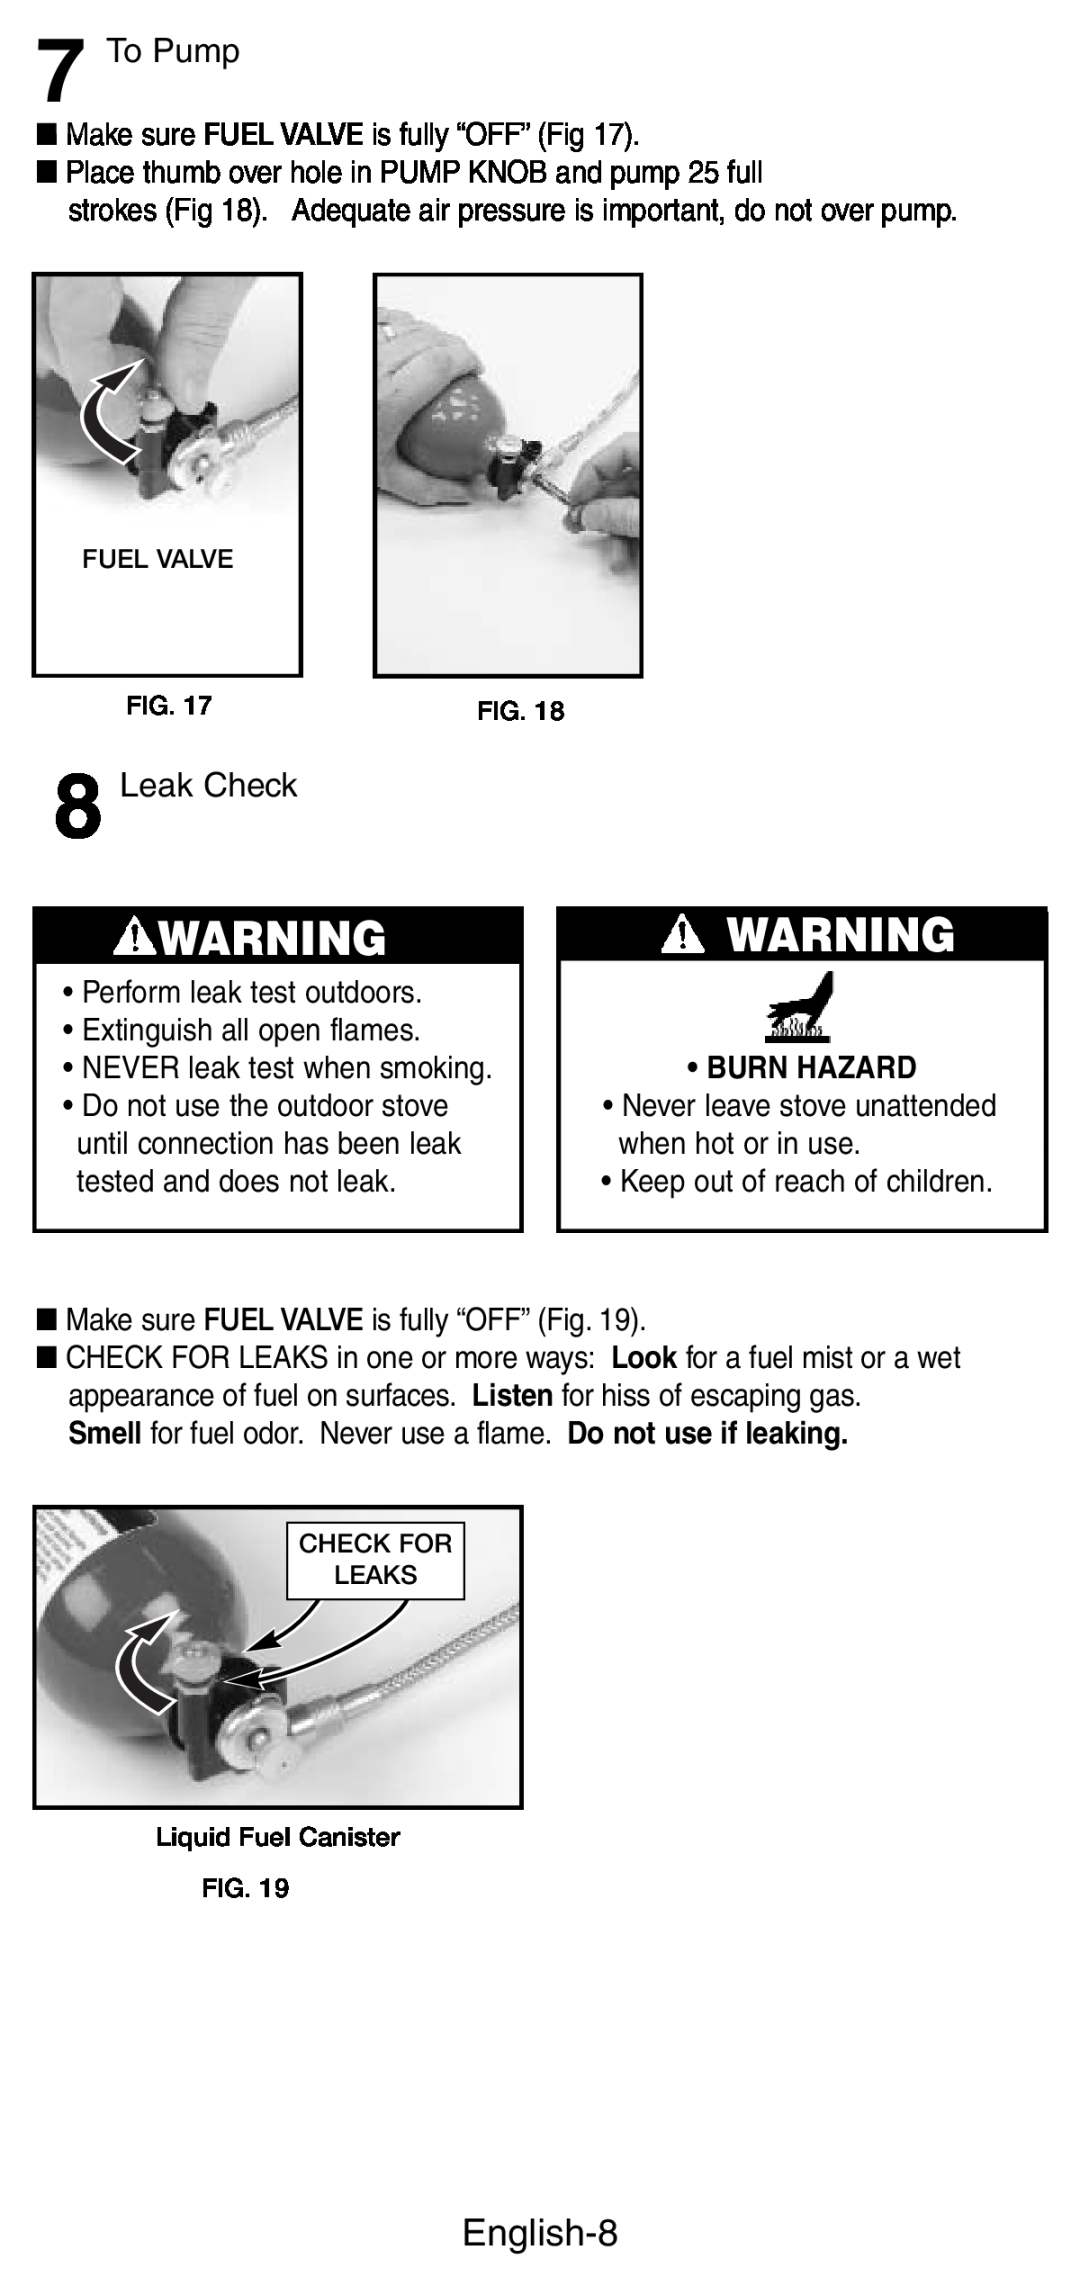 Coleman 9760 manual English-8, To Pump, Leak Check, Burn Hazard 